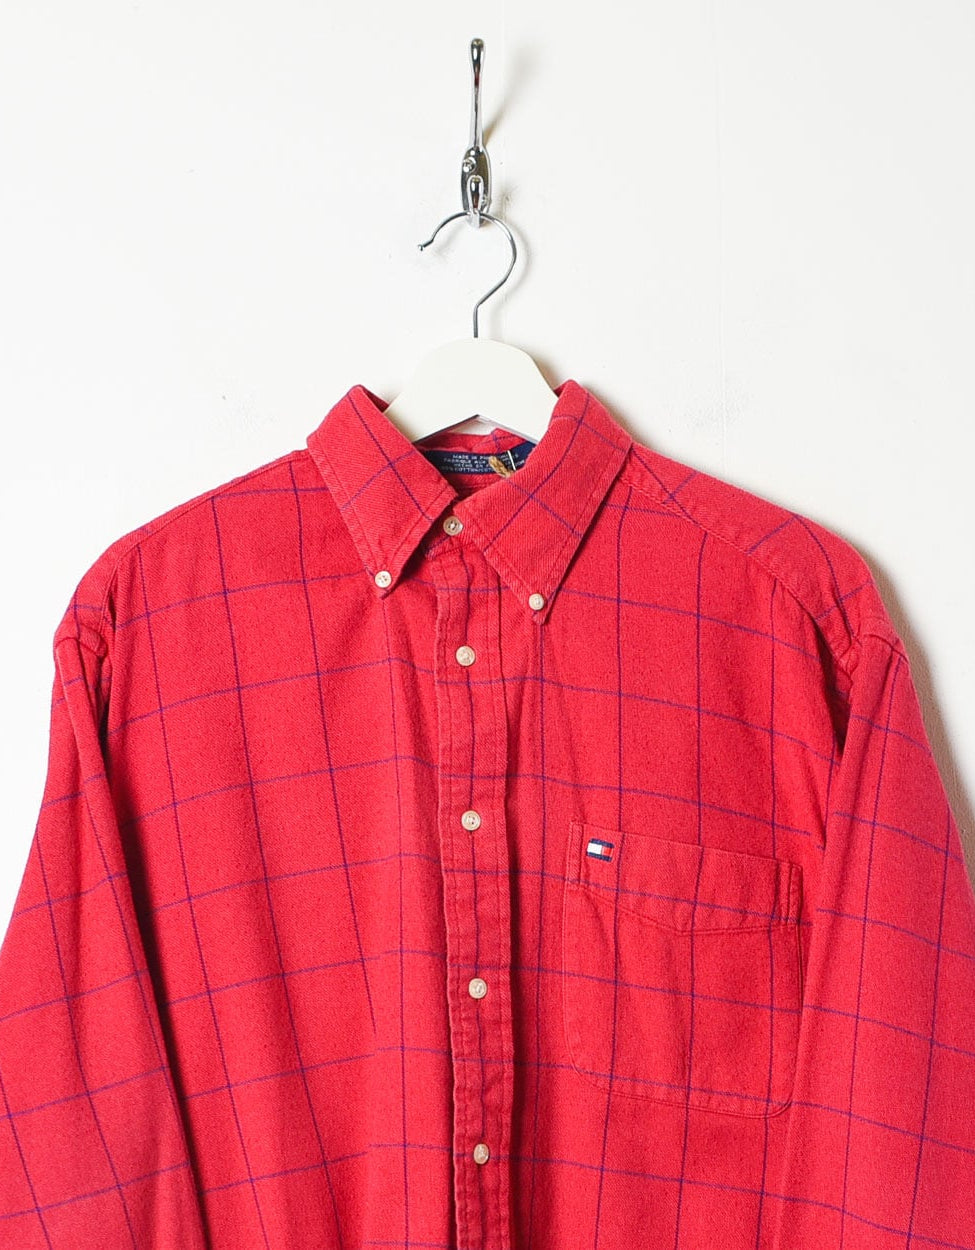 Red Tommy Hilfiger Flannel Shirt - Medium